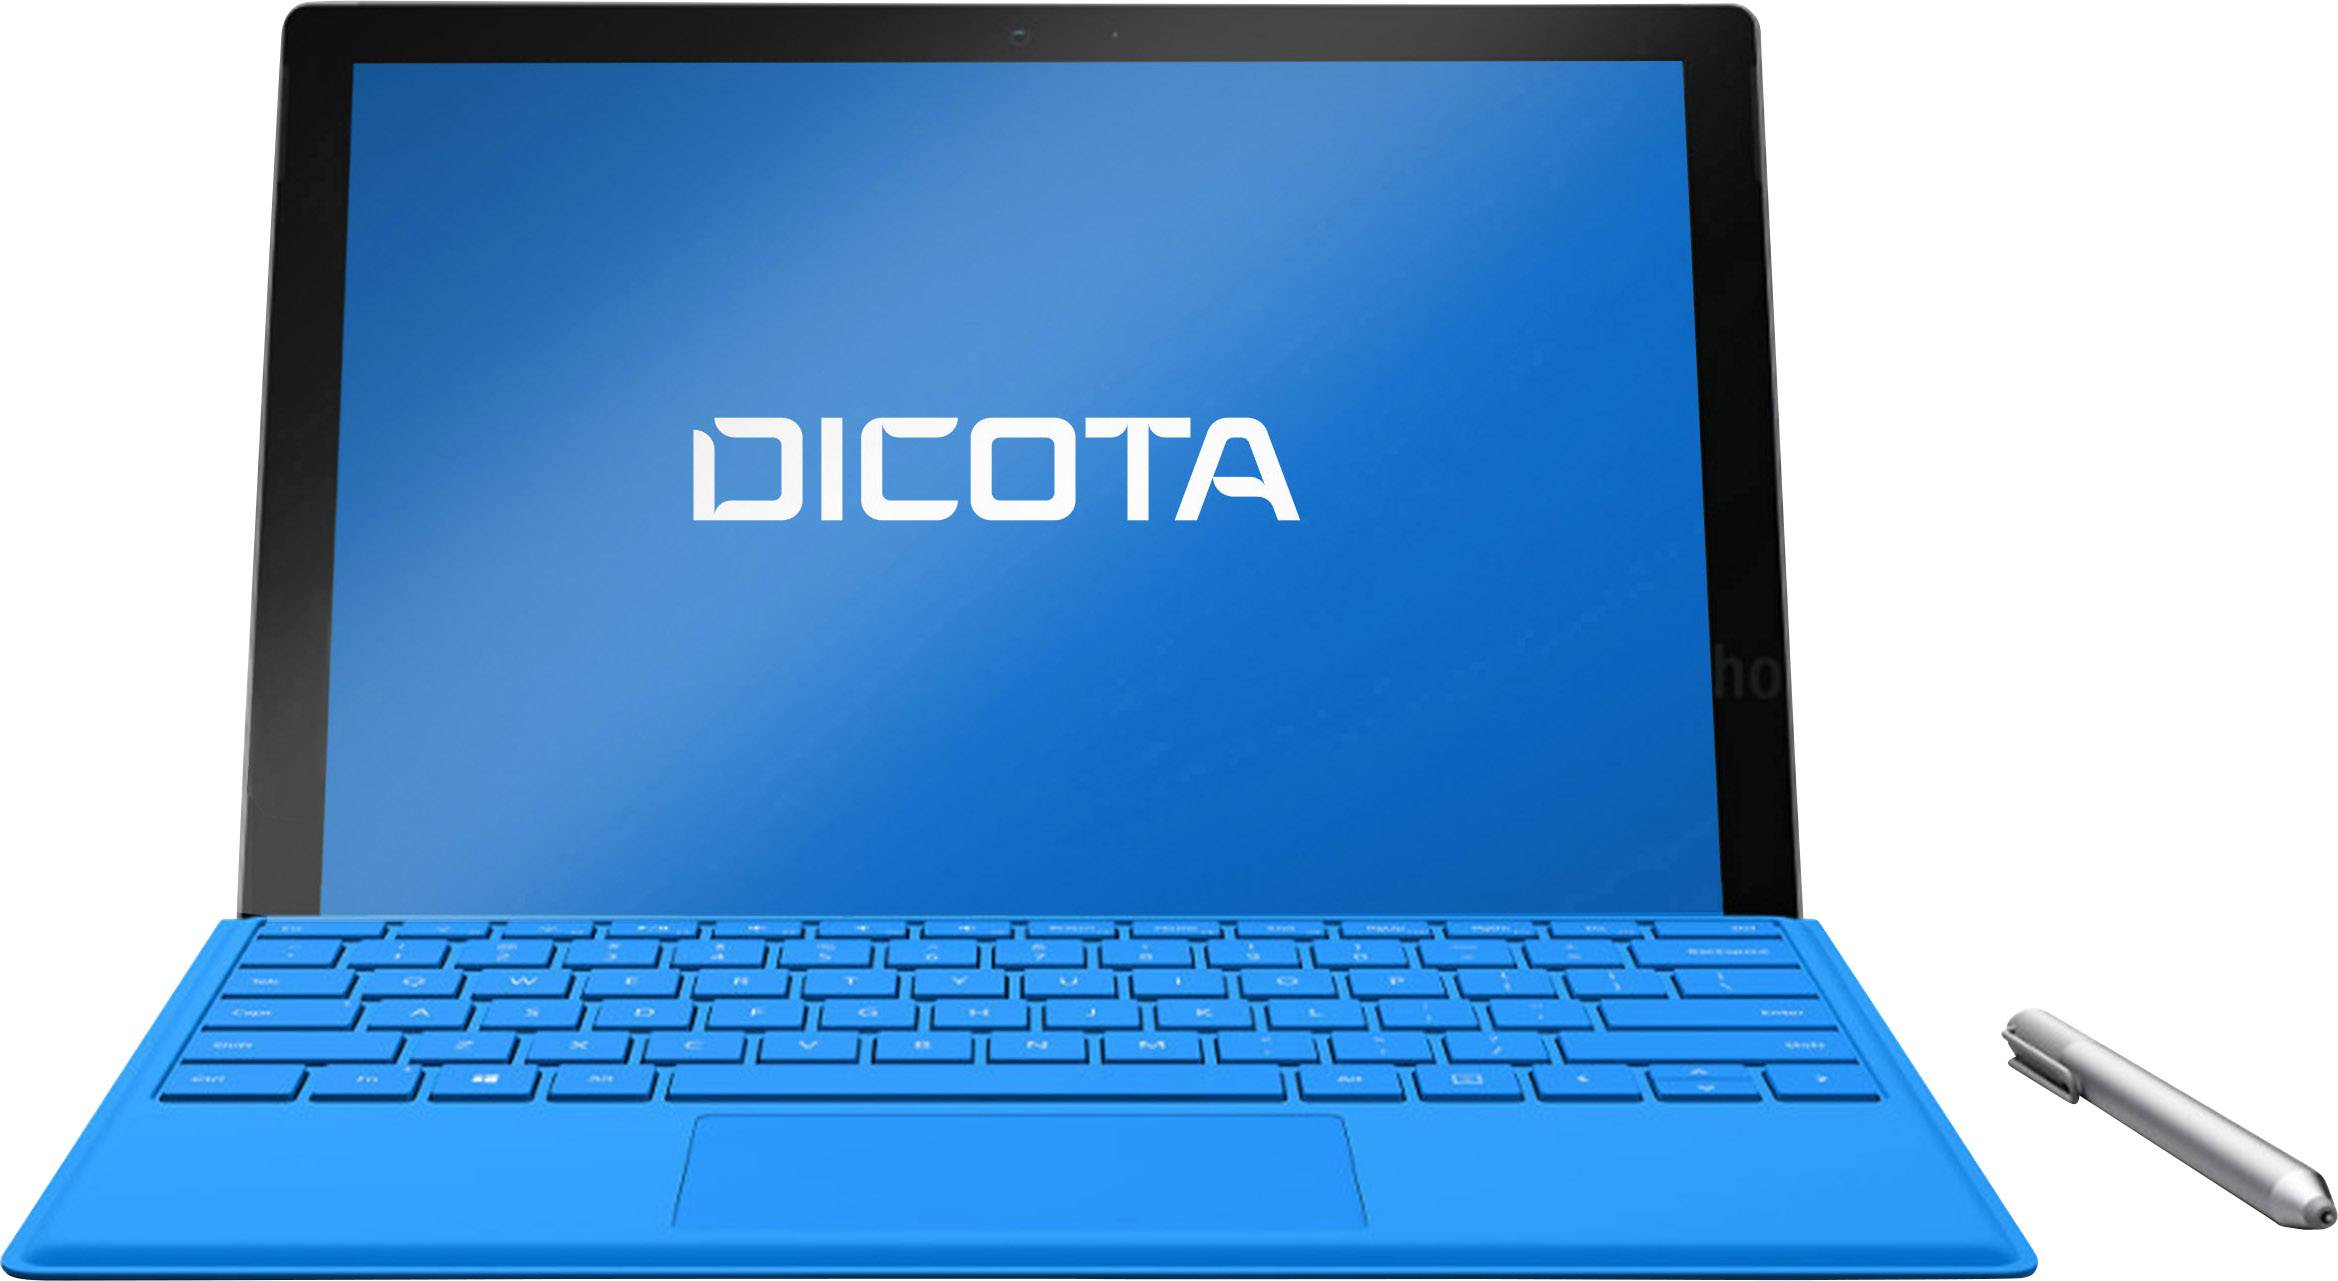 Dicota Secret 2 Way Fur Microsoft Surface Pro 4 Premium Blickschutzfolie 2 Wege Privacy Screen Filter 31 2 Cm 12 3 Conrad Com